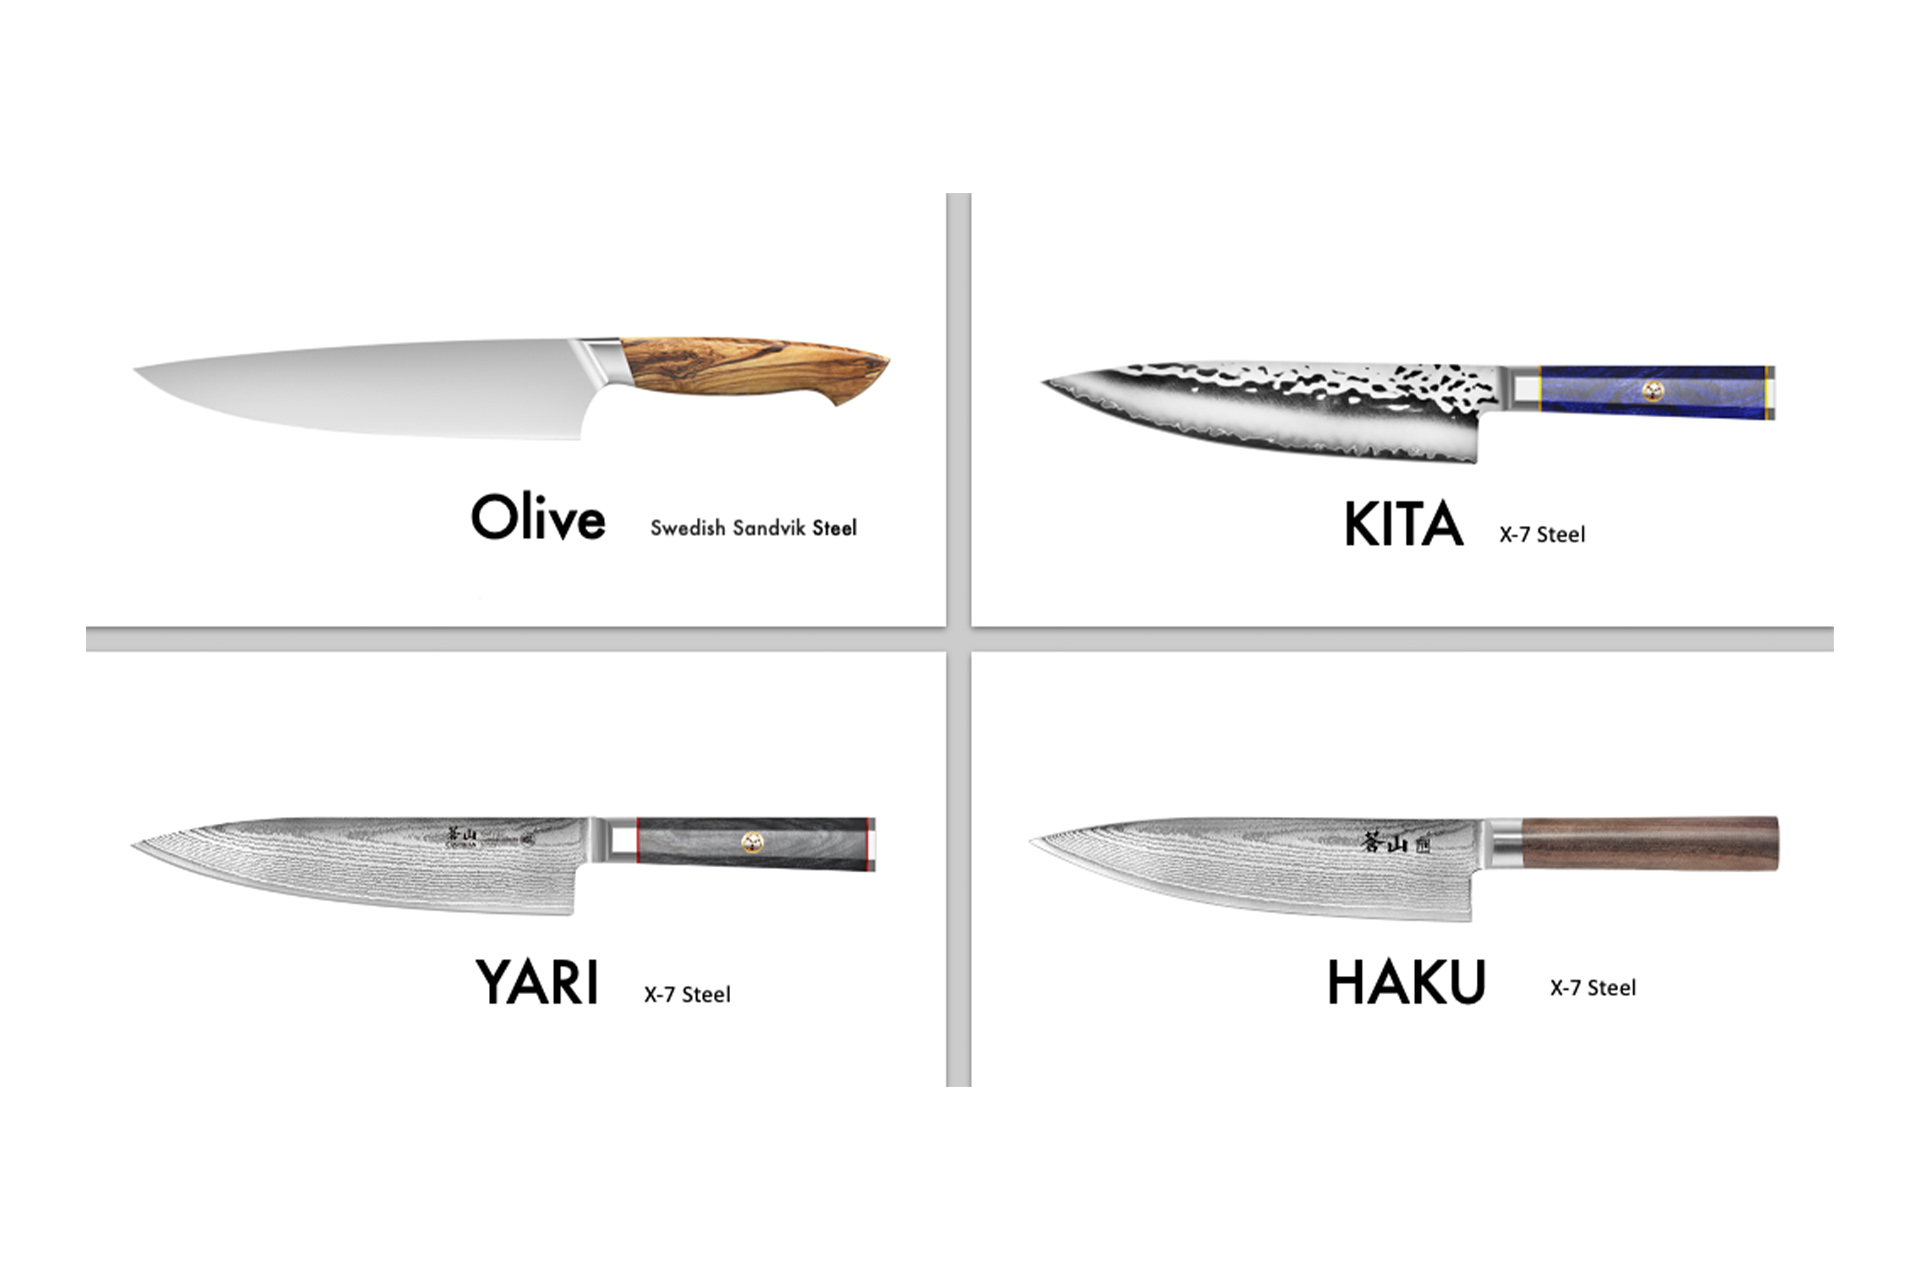 https://www.homepagenews.com/wp-content/uploads/2022/02/cangshan-knives.jpg